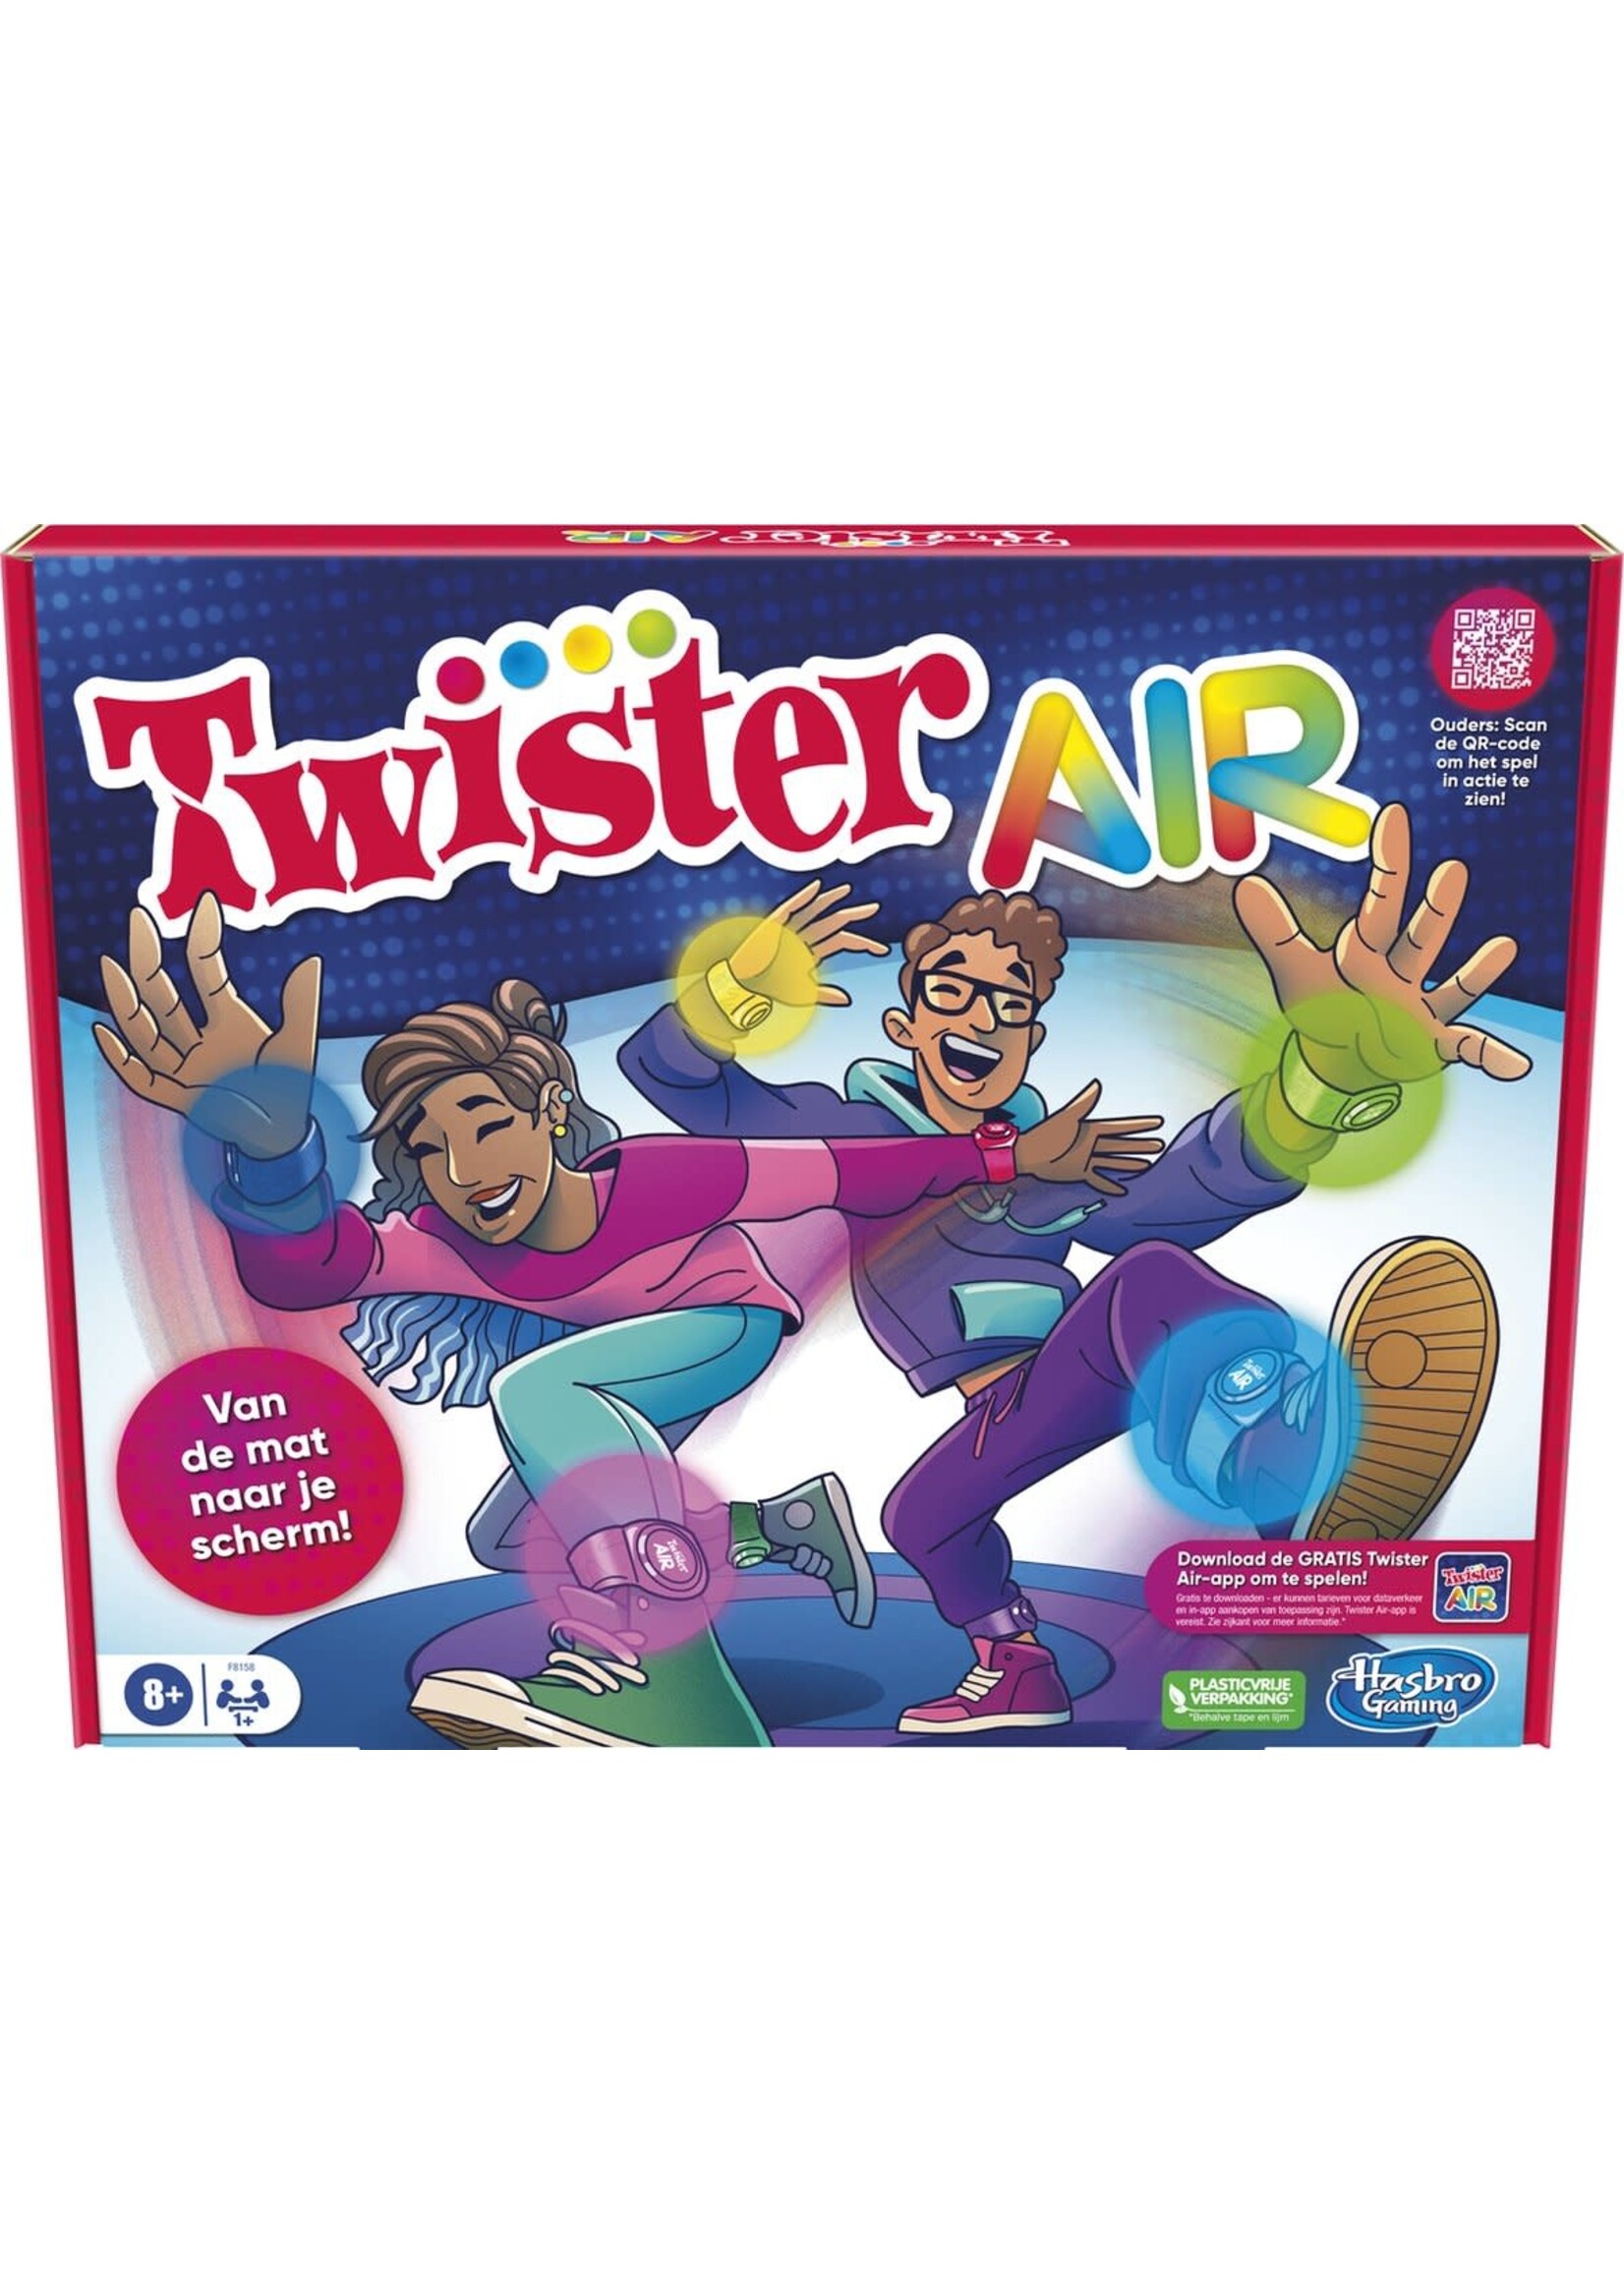 Hasbro Twister Air